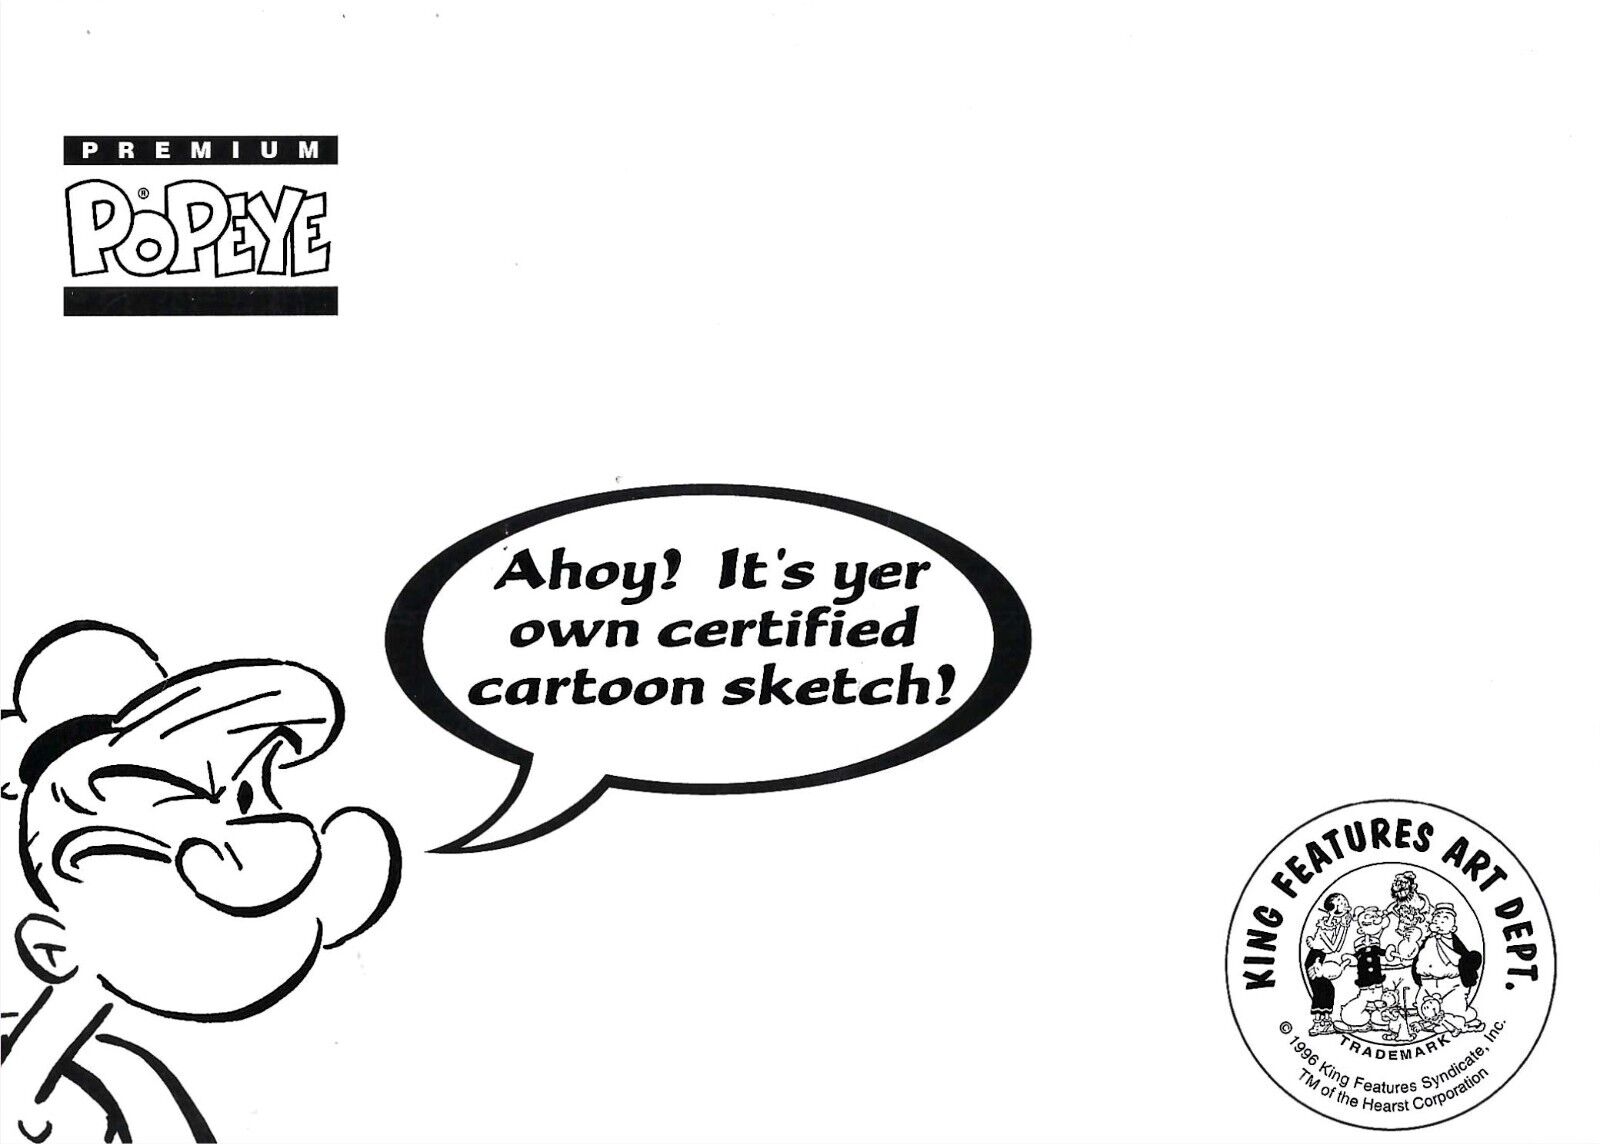 1996 Premium Popeye Certified Cartoon Sketch Bluto